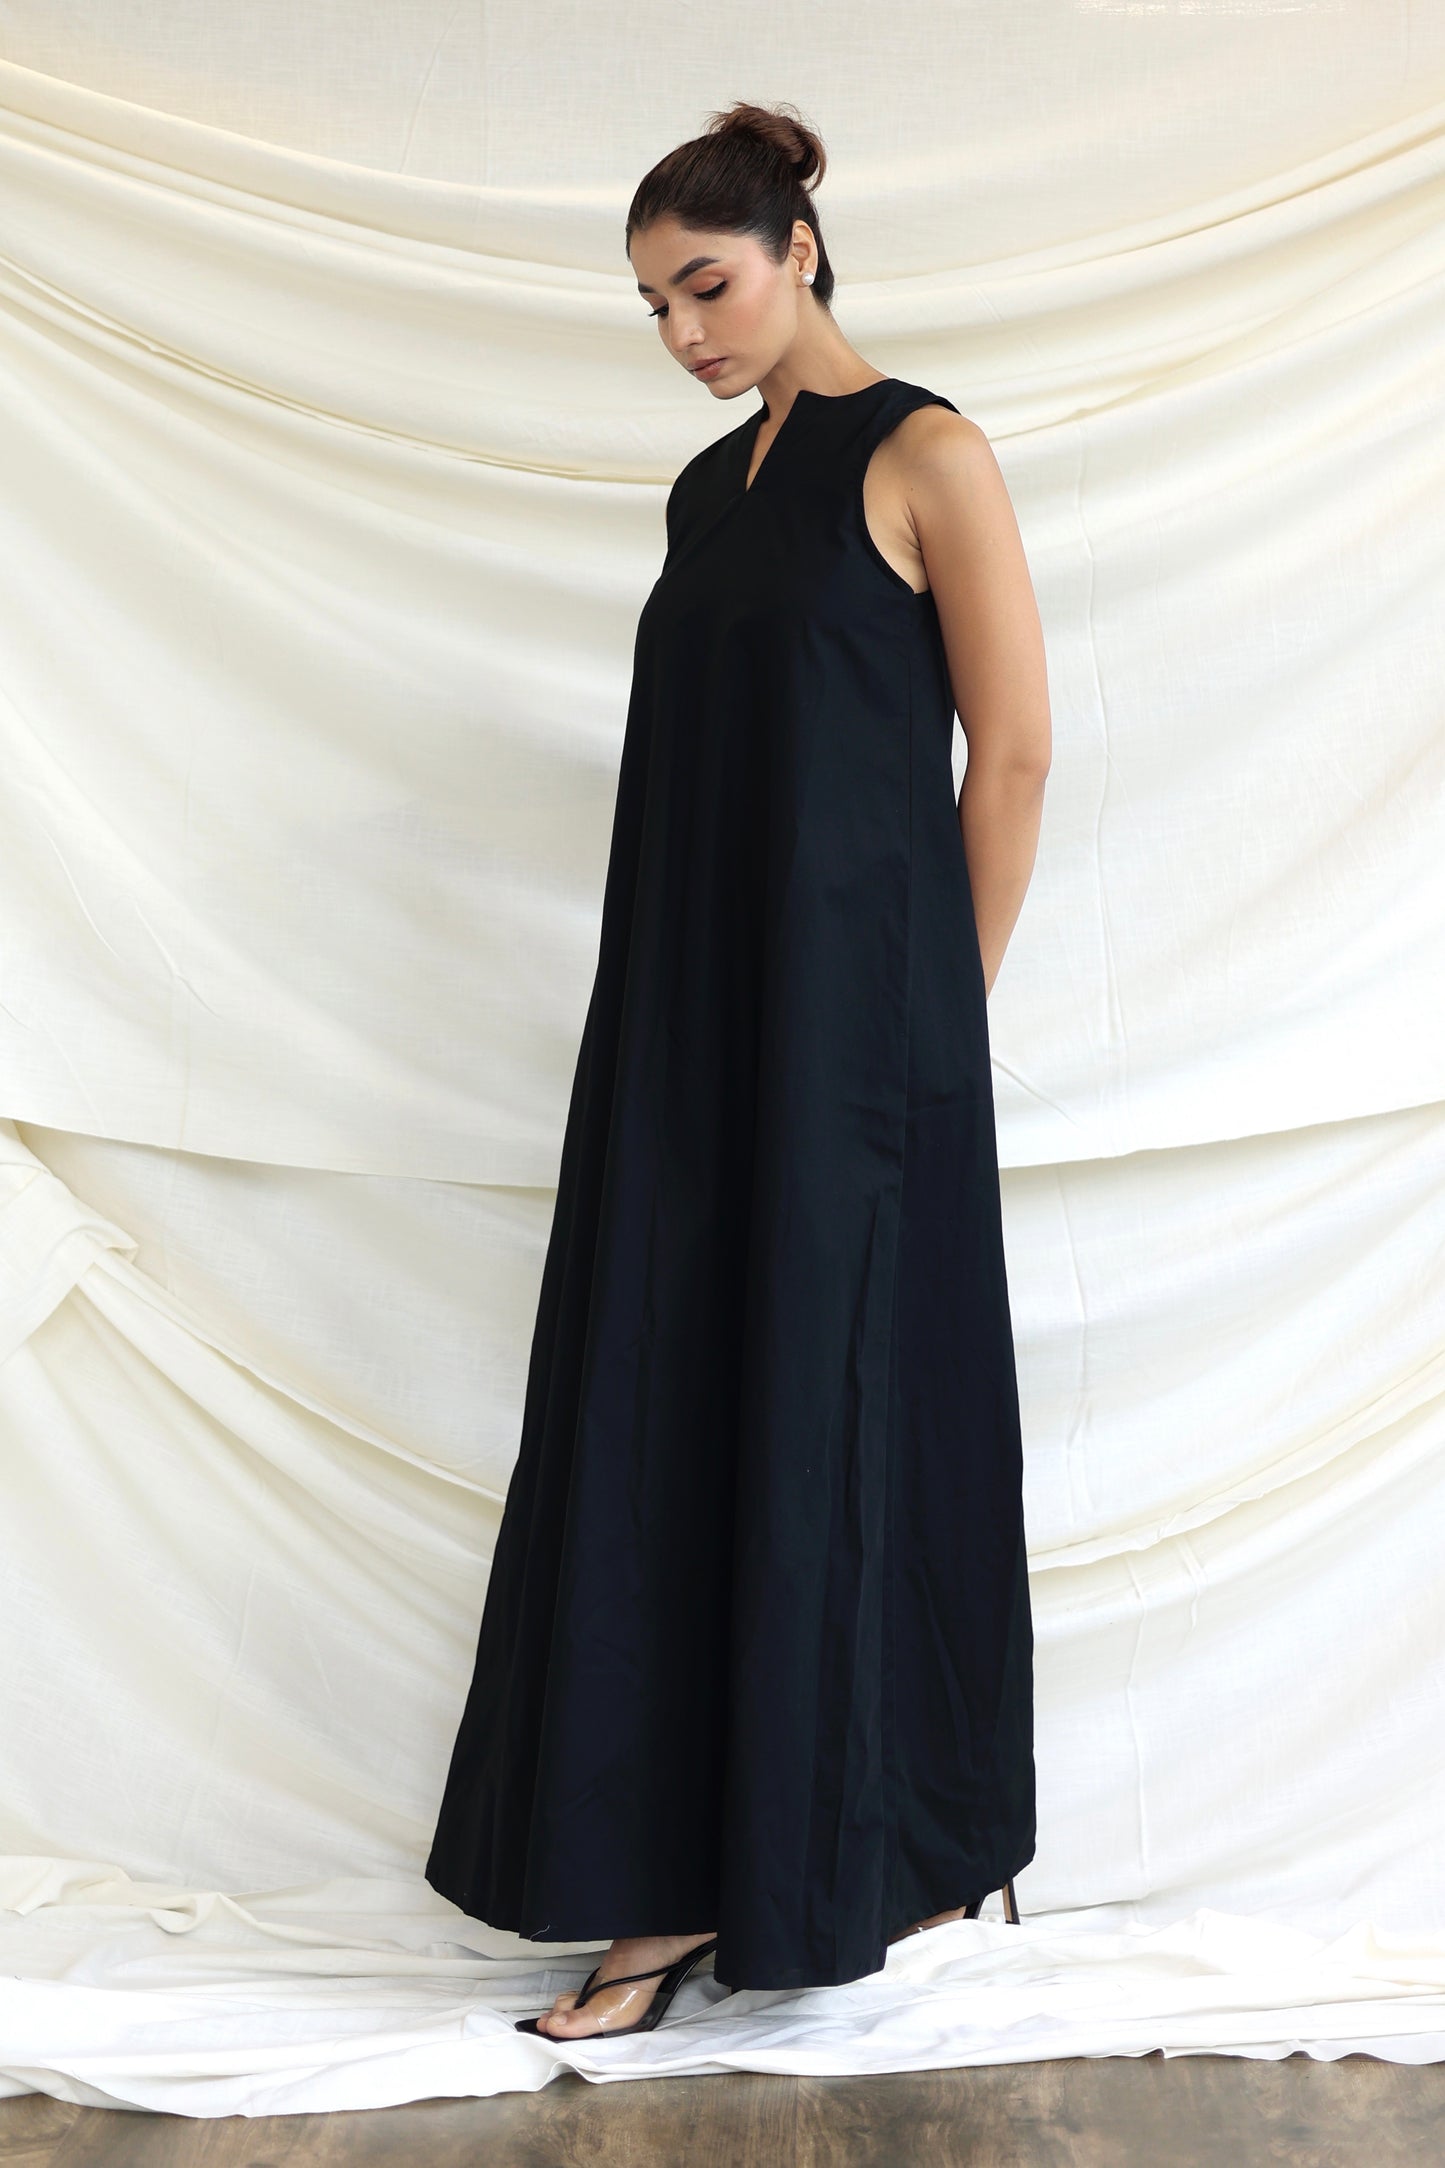 Black long halter neck dress